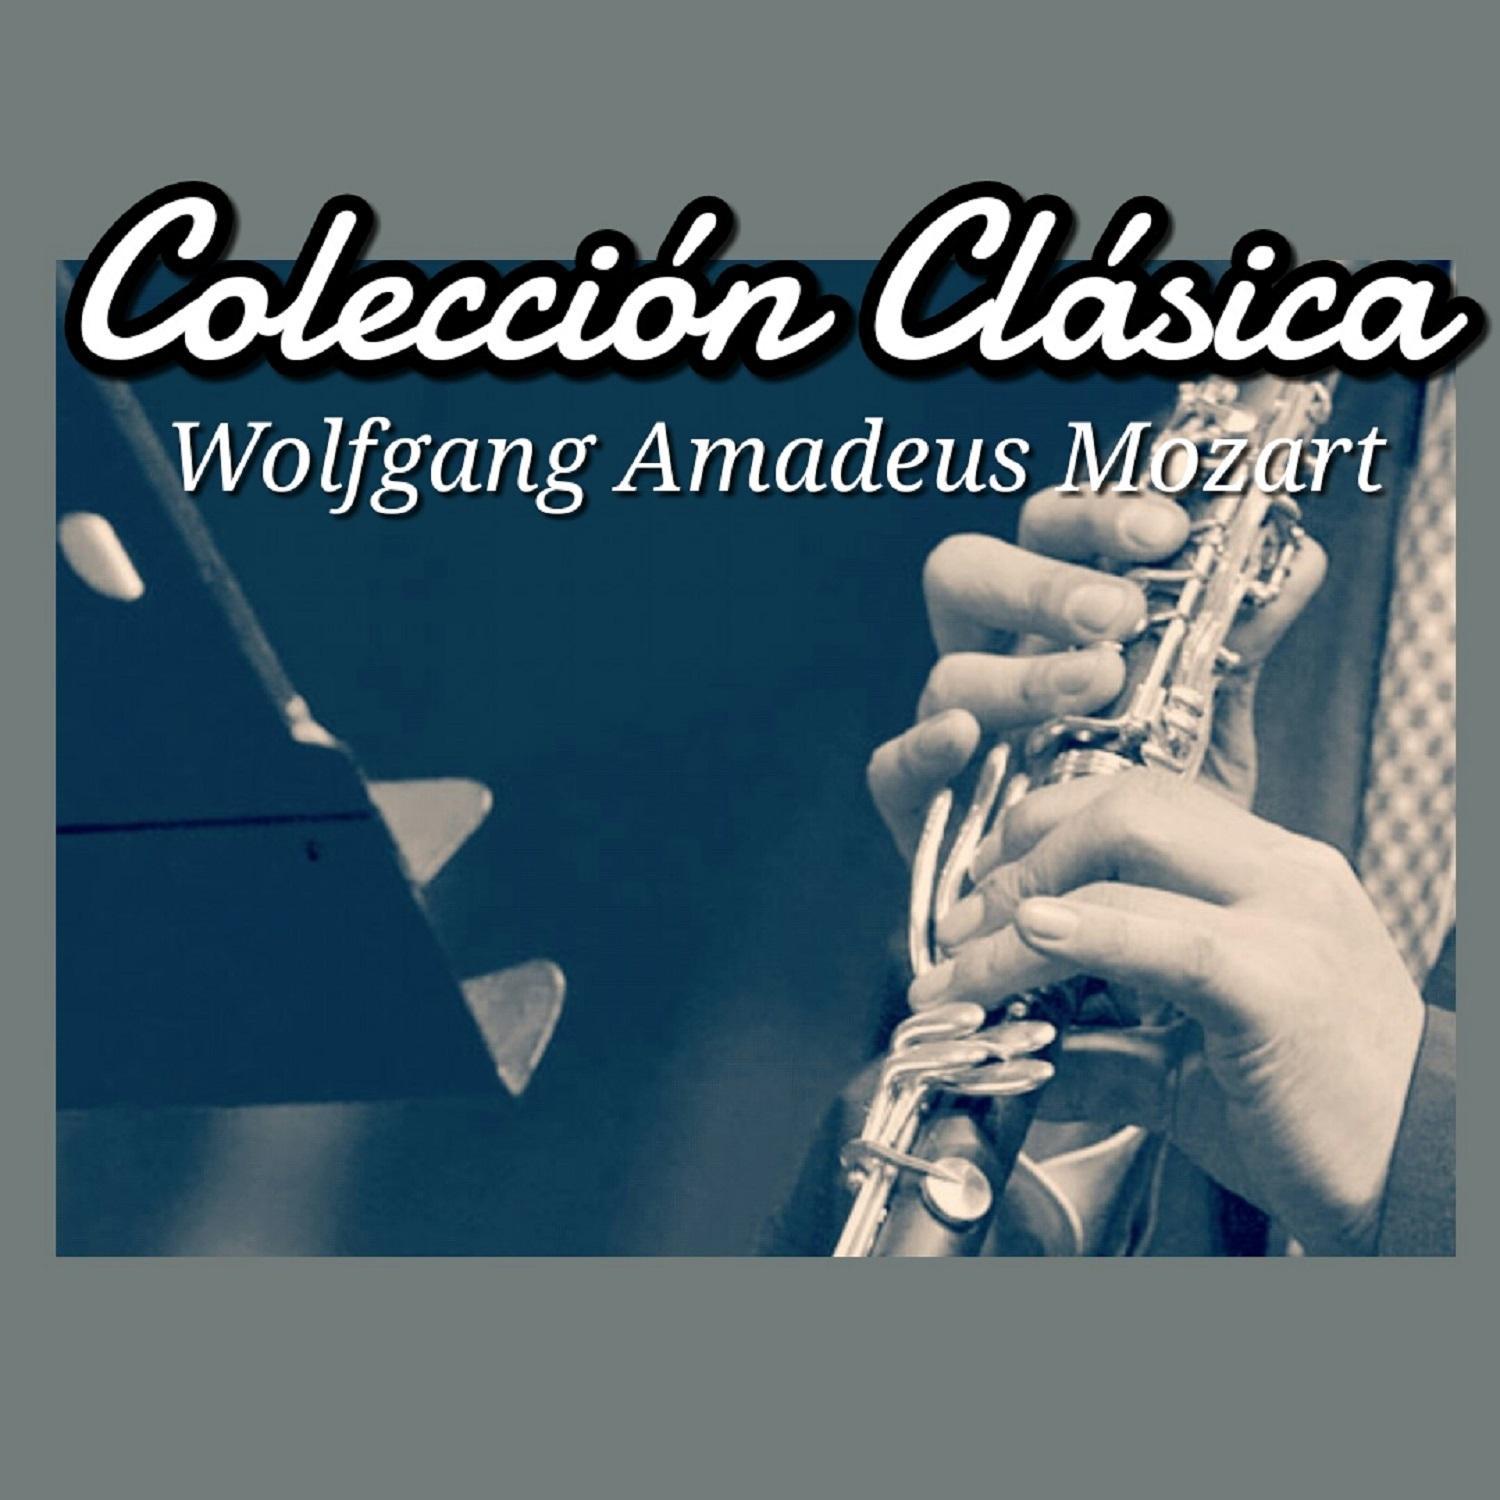 Coleccio n Cla sica: Wolfgang Amadeus Mozart